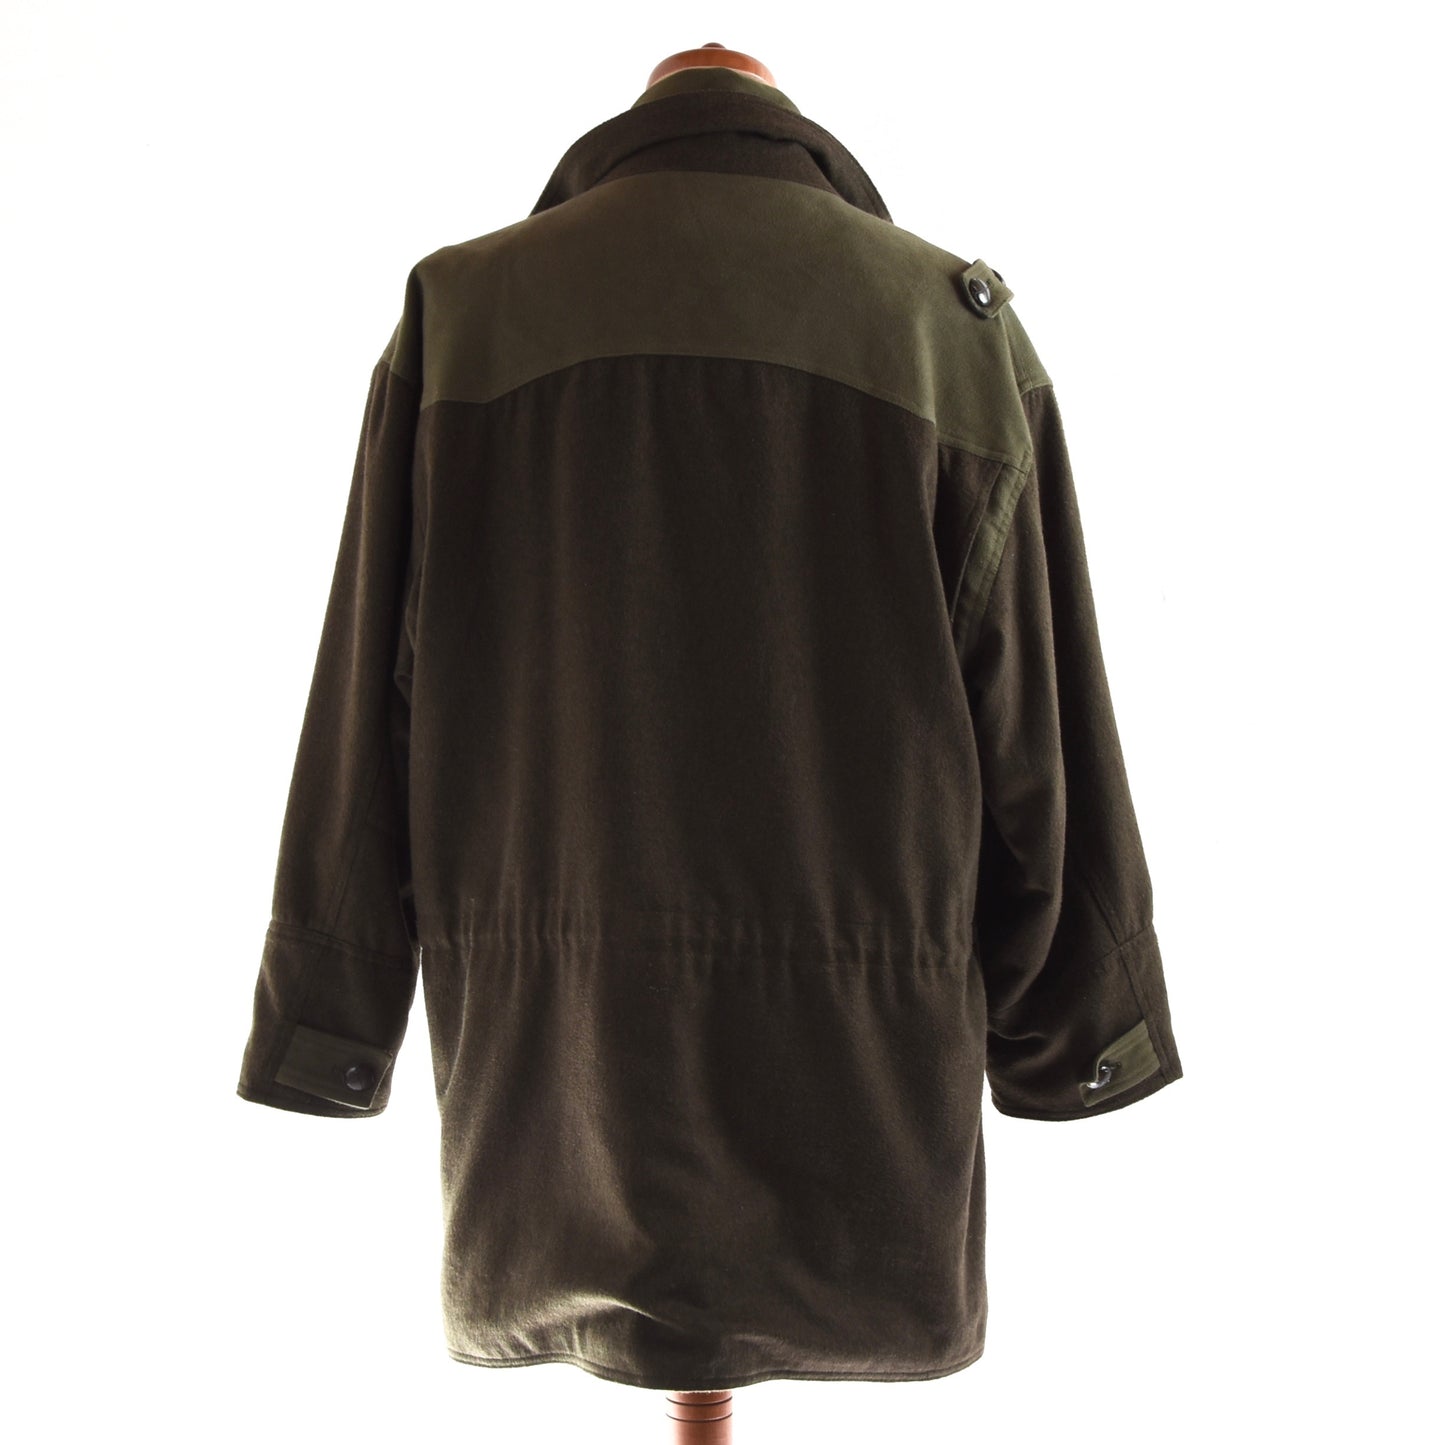 Alpjagd Hunting Coat Size 50 - Green